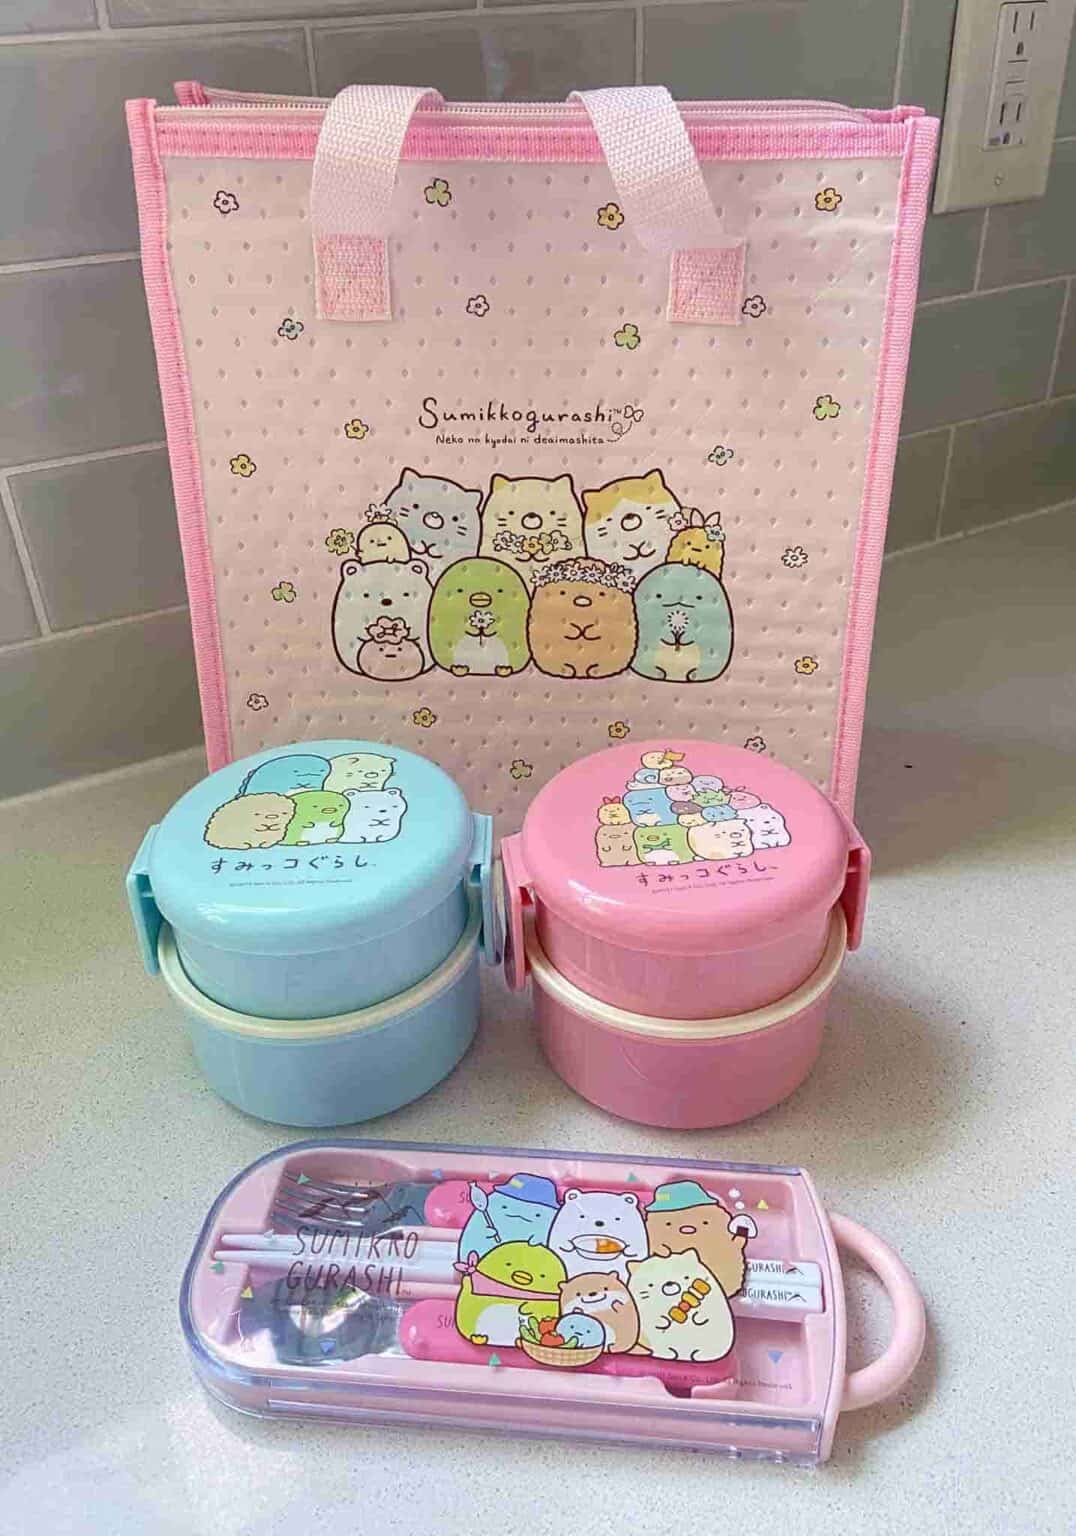 Rinkya on X: Super Kawaii Bento Box Ideas: cute Pikachu!   #bento #bentoideas #rinkya #japan #cute #pikachu   / X